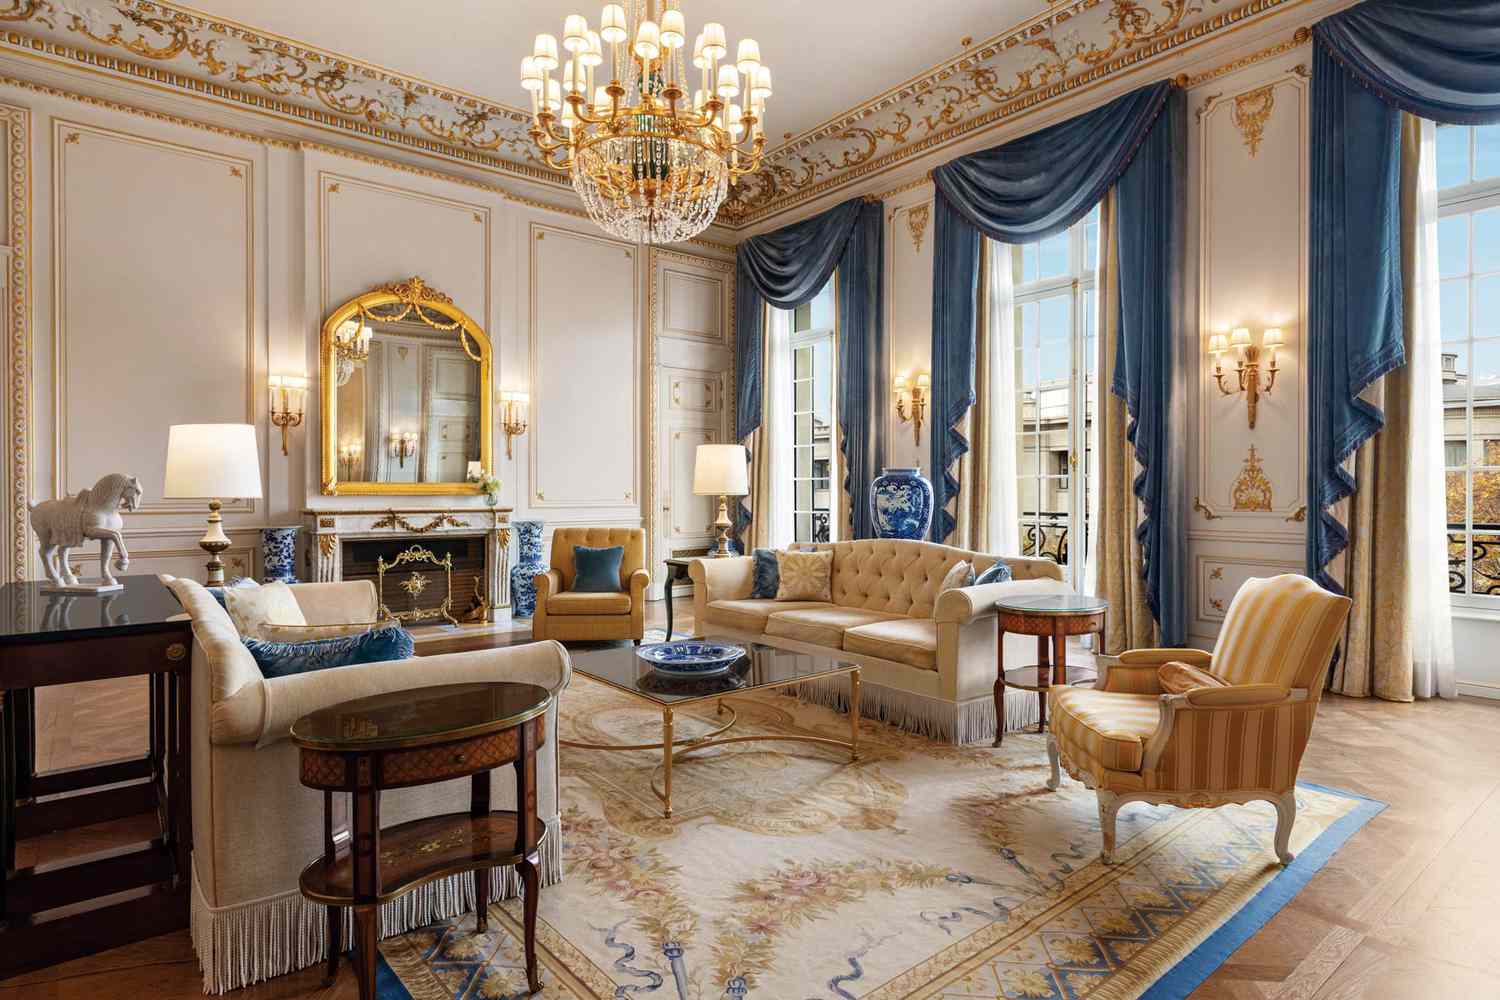 The Prince Bonaparte apartment in Shangri-La Paris, a decadent old world luxury style 